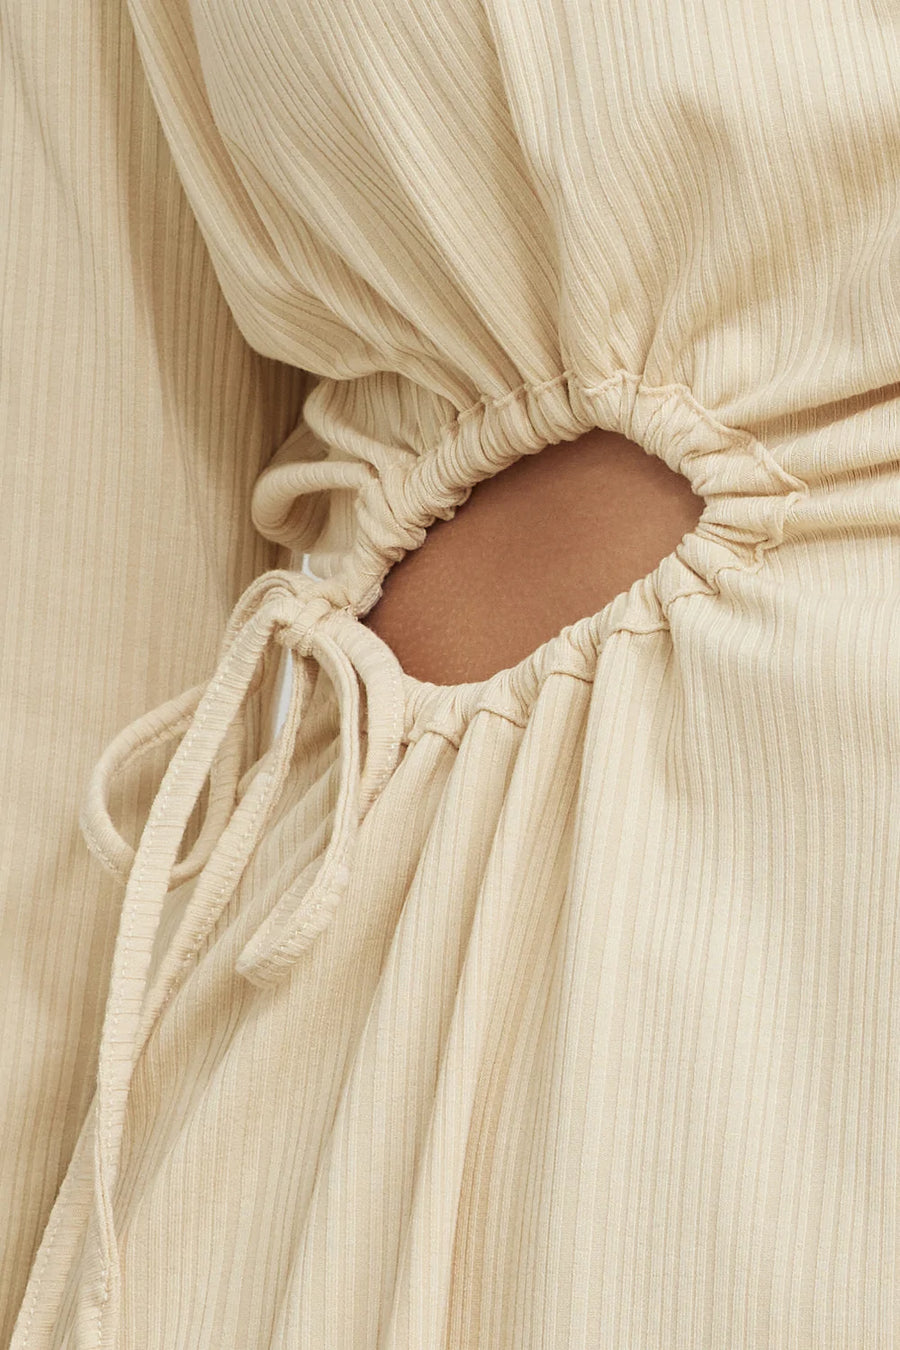 TOJHA - Fallon Dress in Vanilla